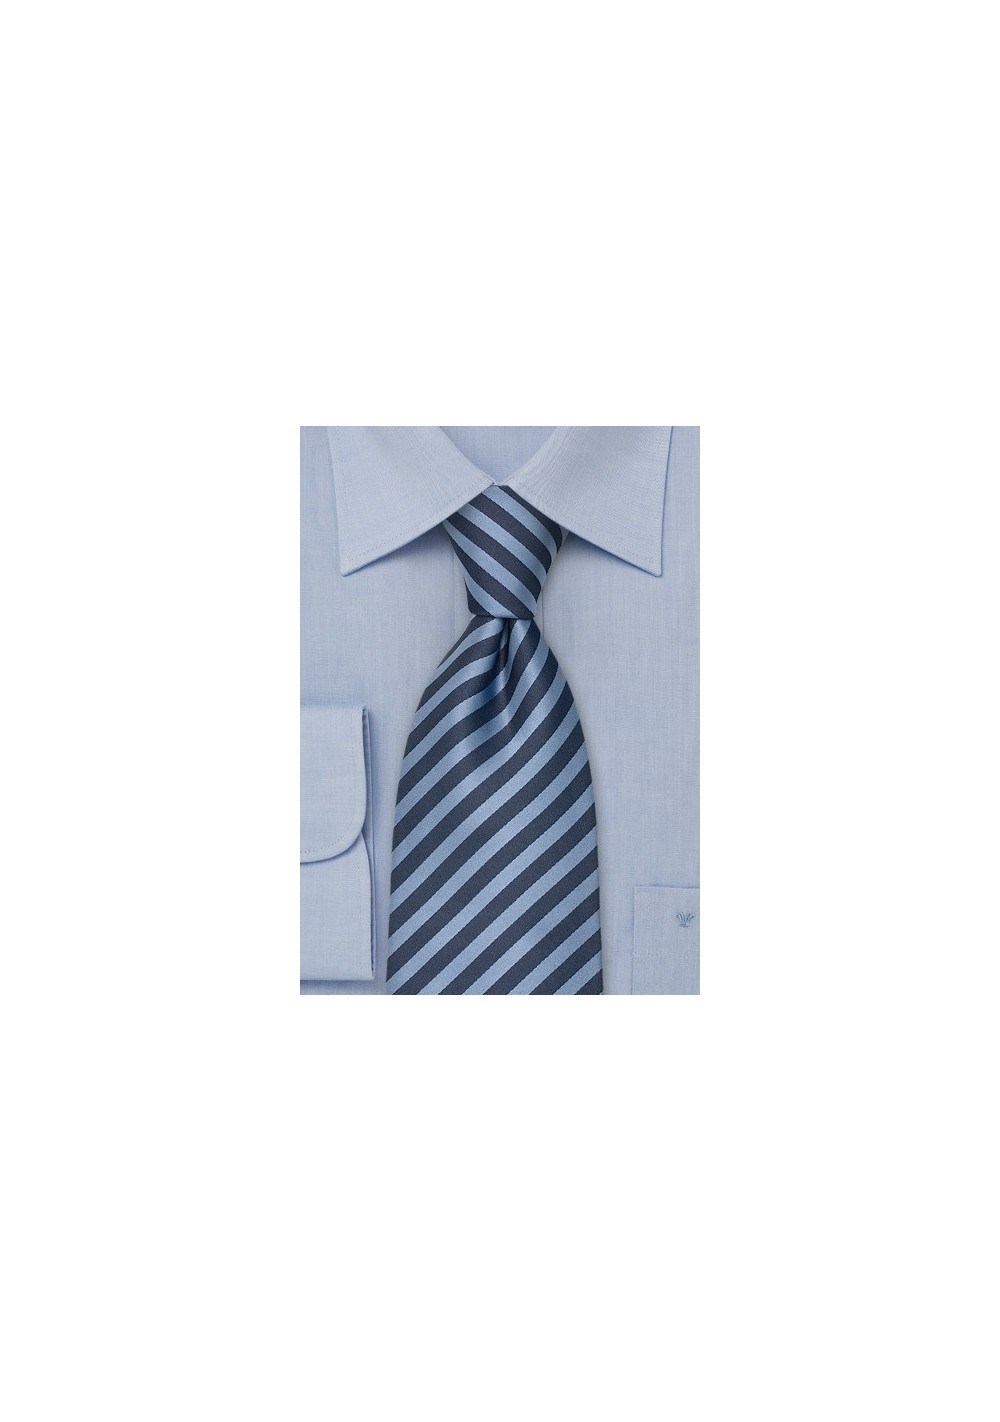 Blue Silk Ties - Modern Striped Silk Tie in Blue